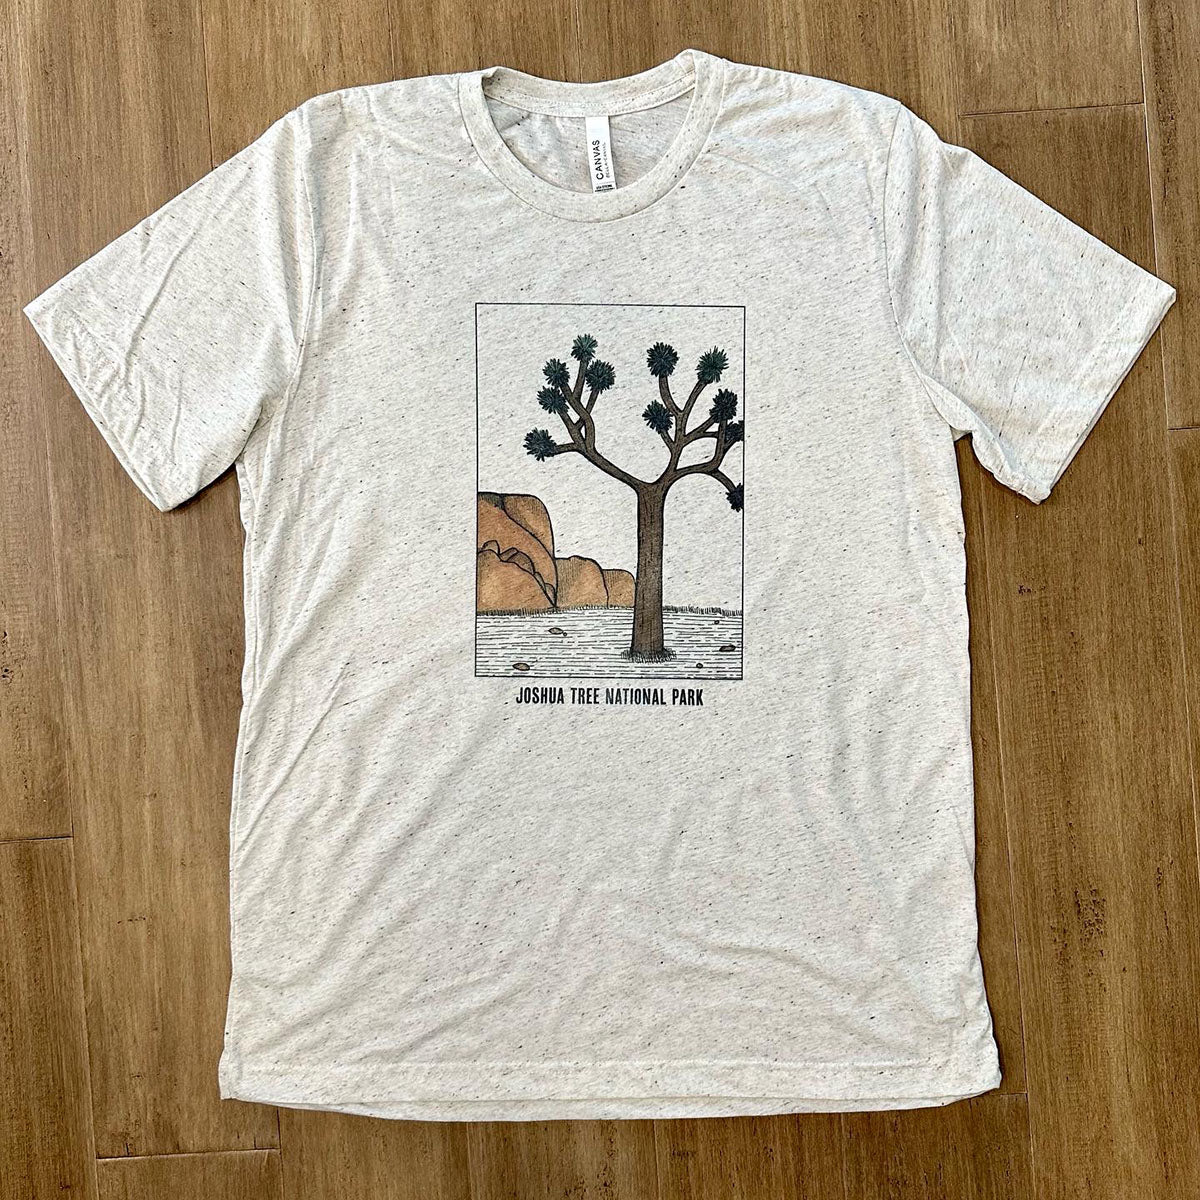 Joshua Tree National Park Illustrated Graphic T-Shirt